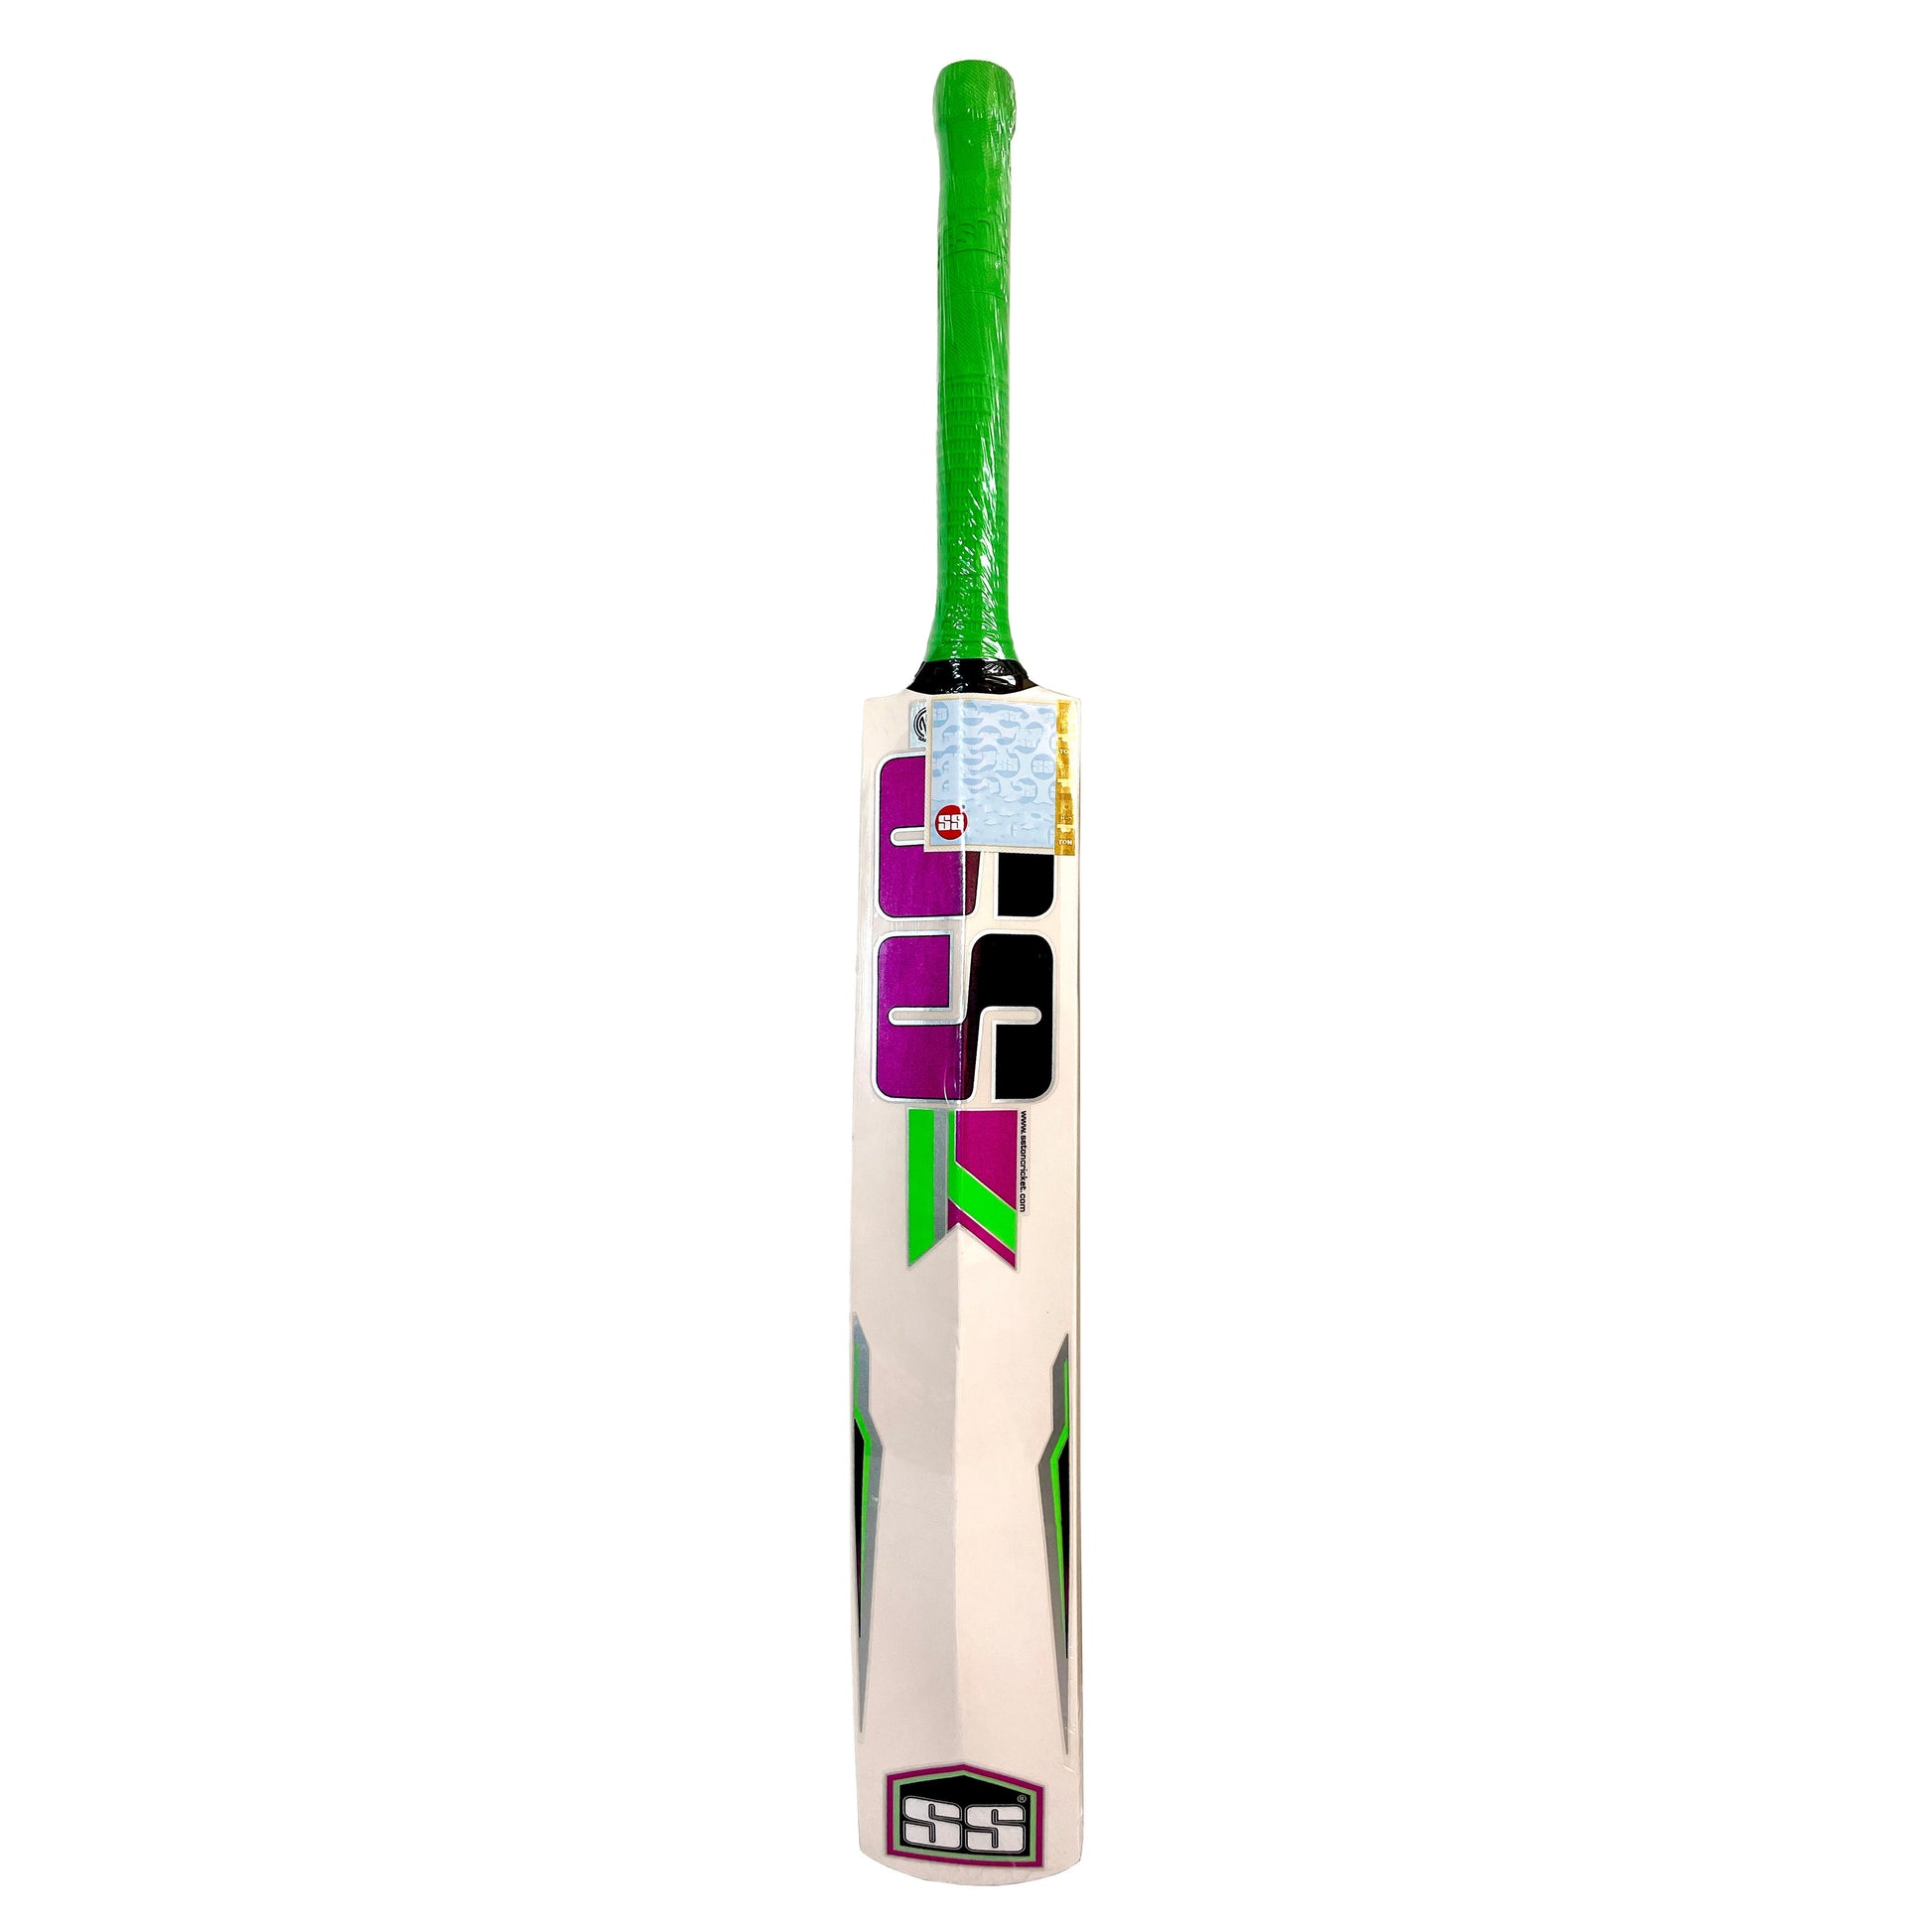 SS Core Range Josh Kashmir Willow Cricket Bat - Junior Size 4 (Four)